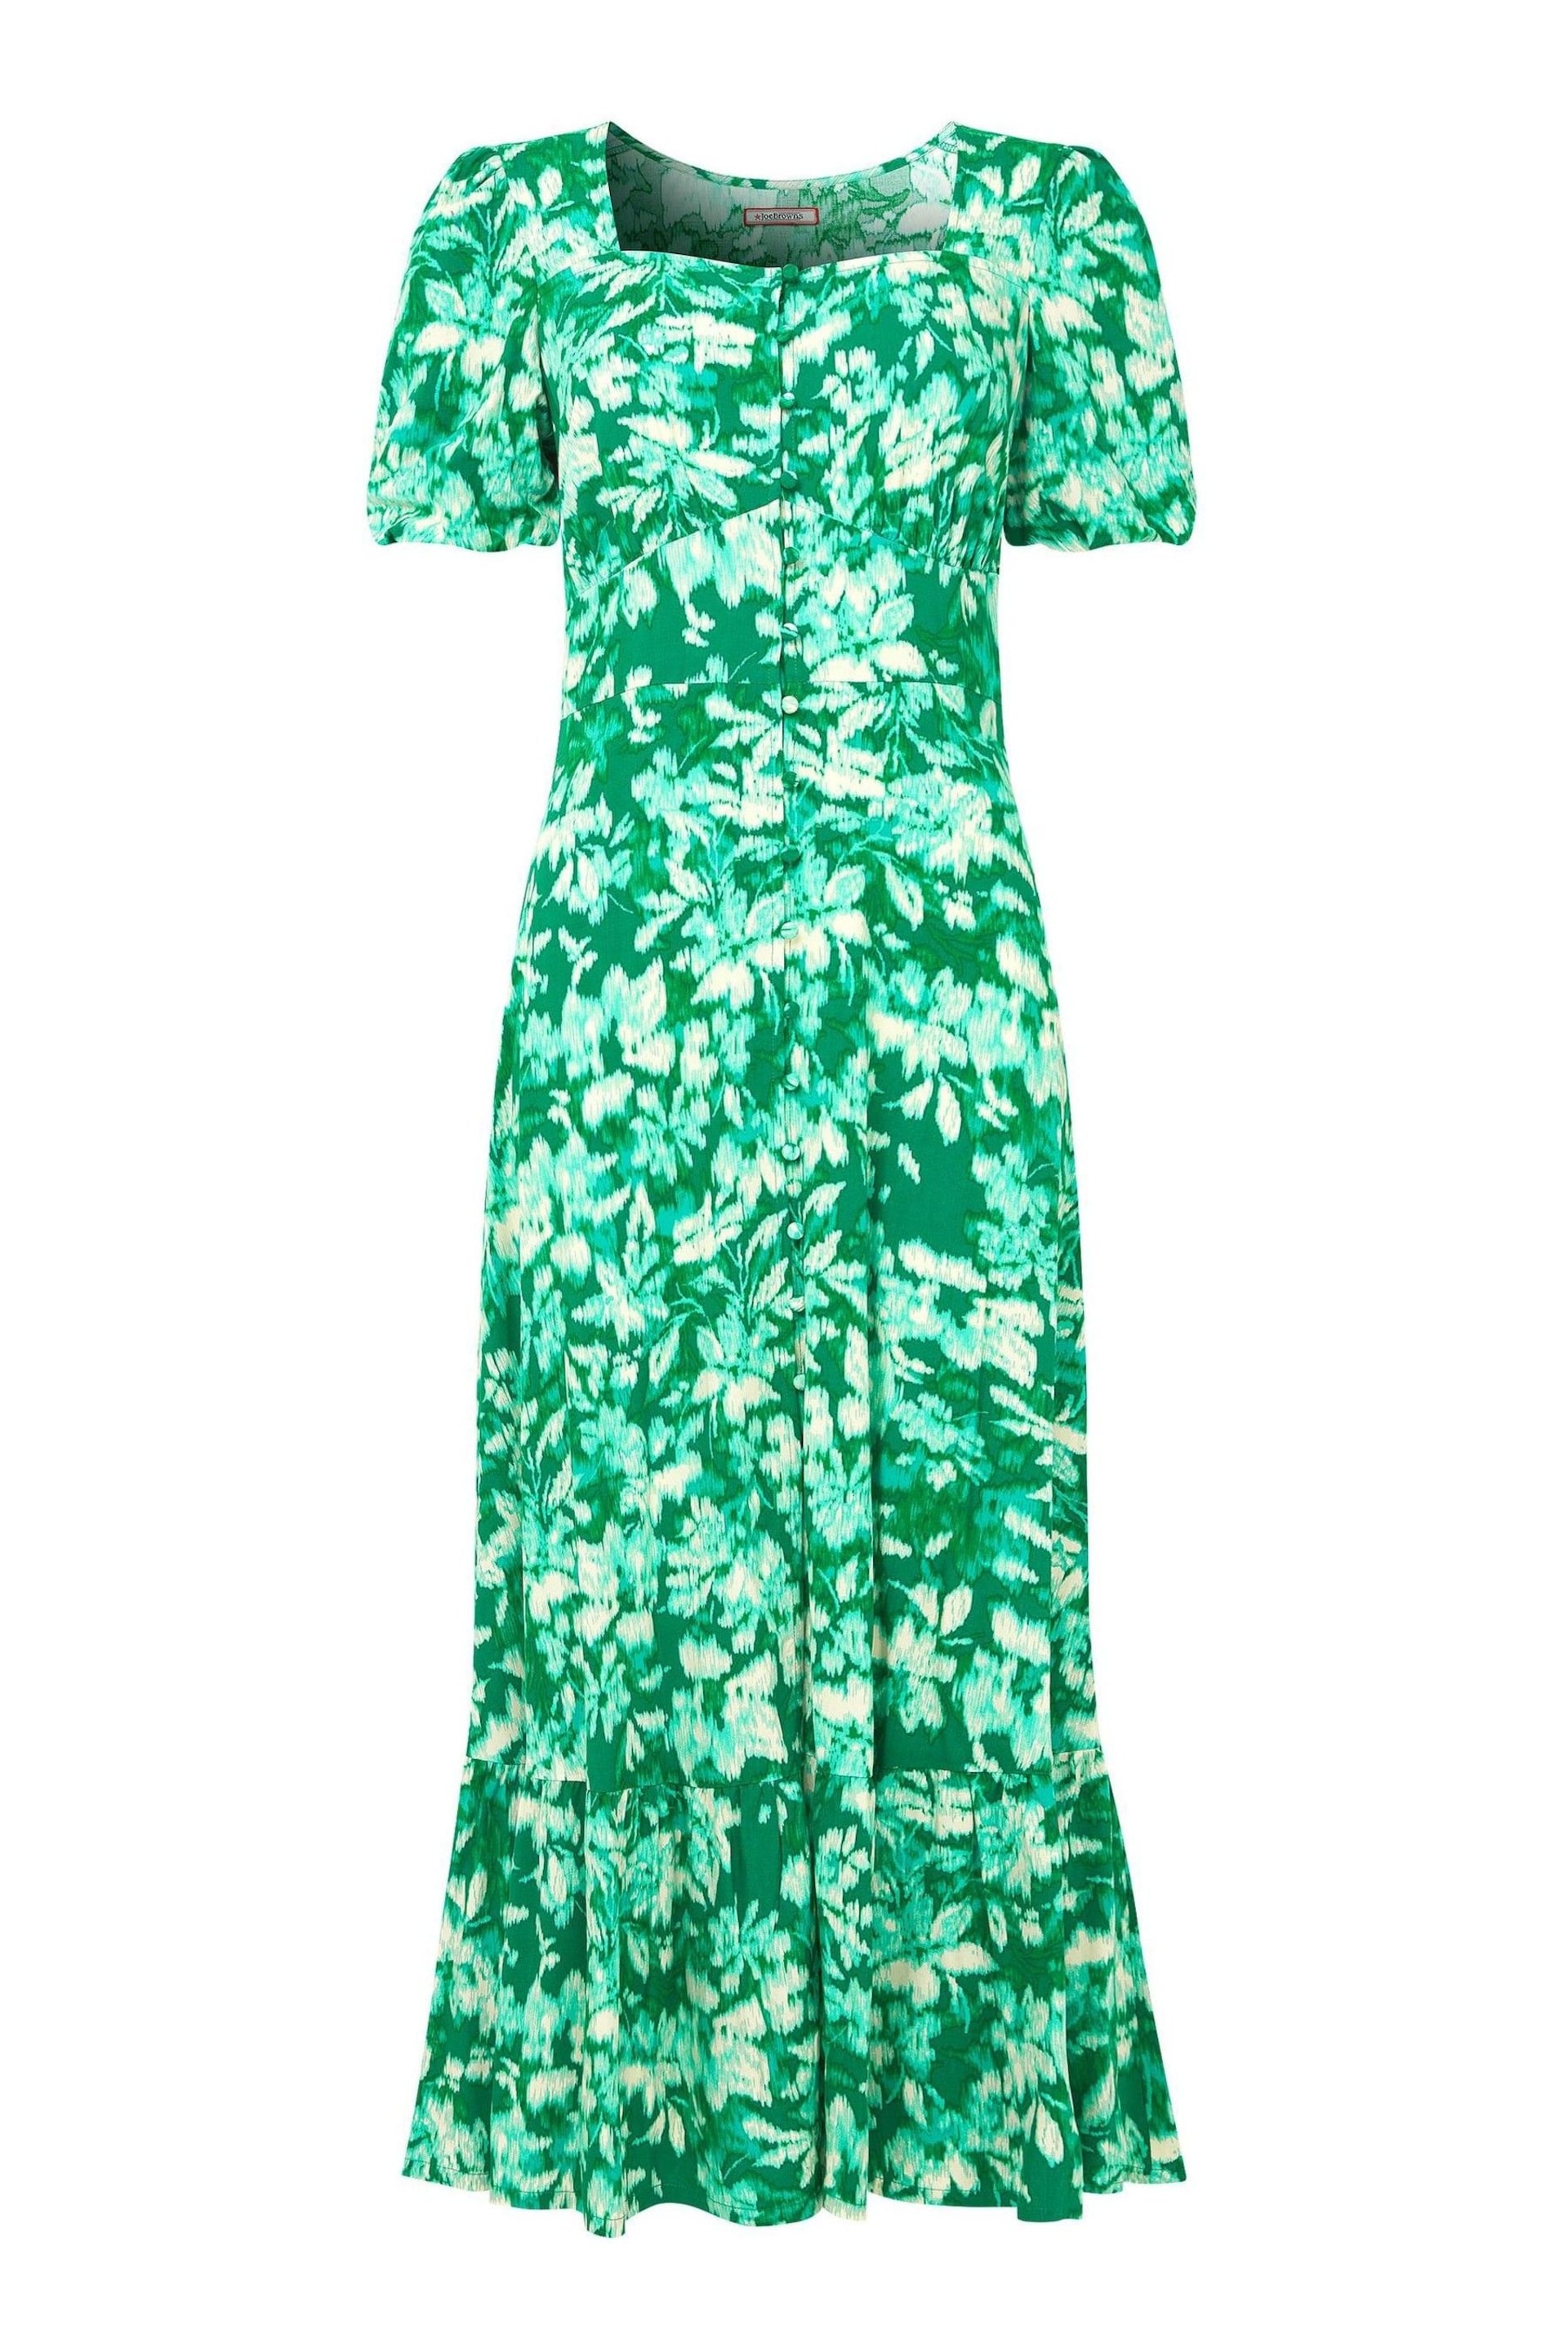 Joe Browns Green Blurred Floral Midi Dress - Image 4 of 4